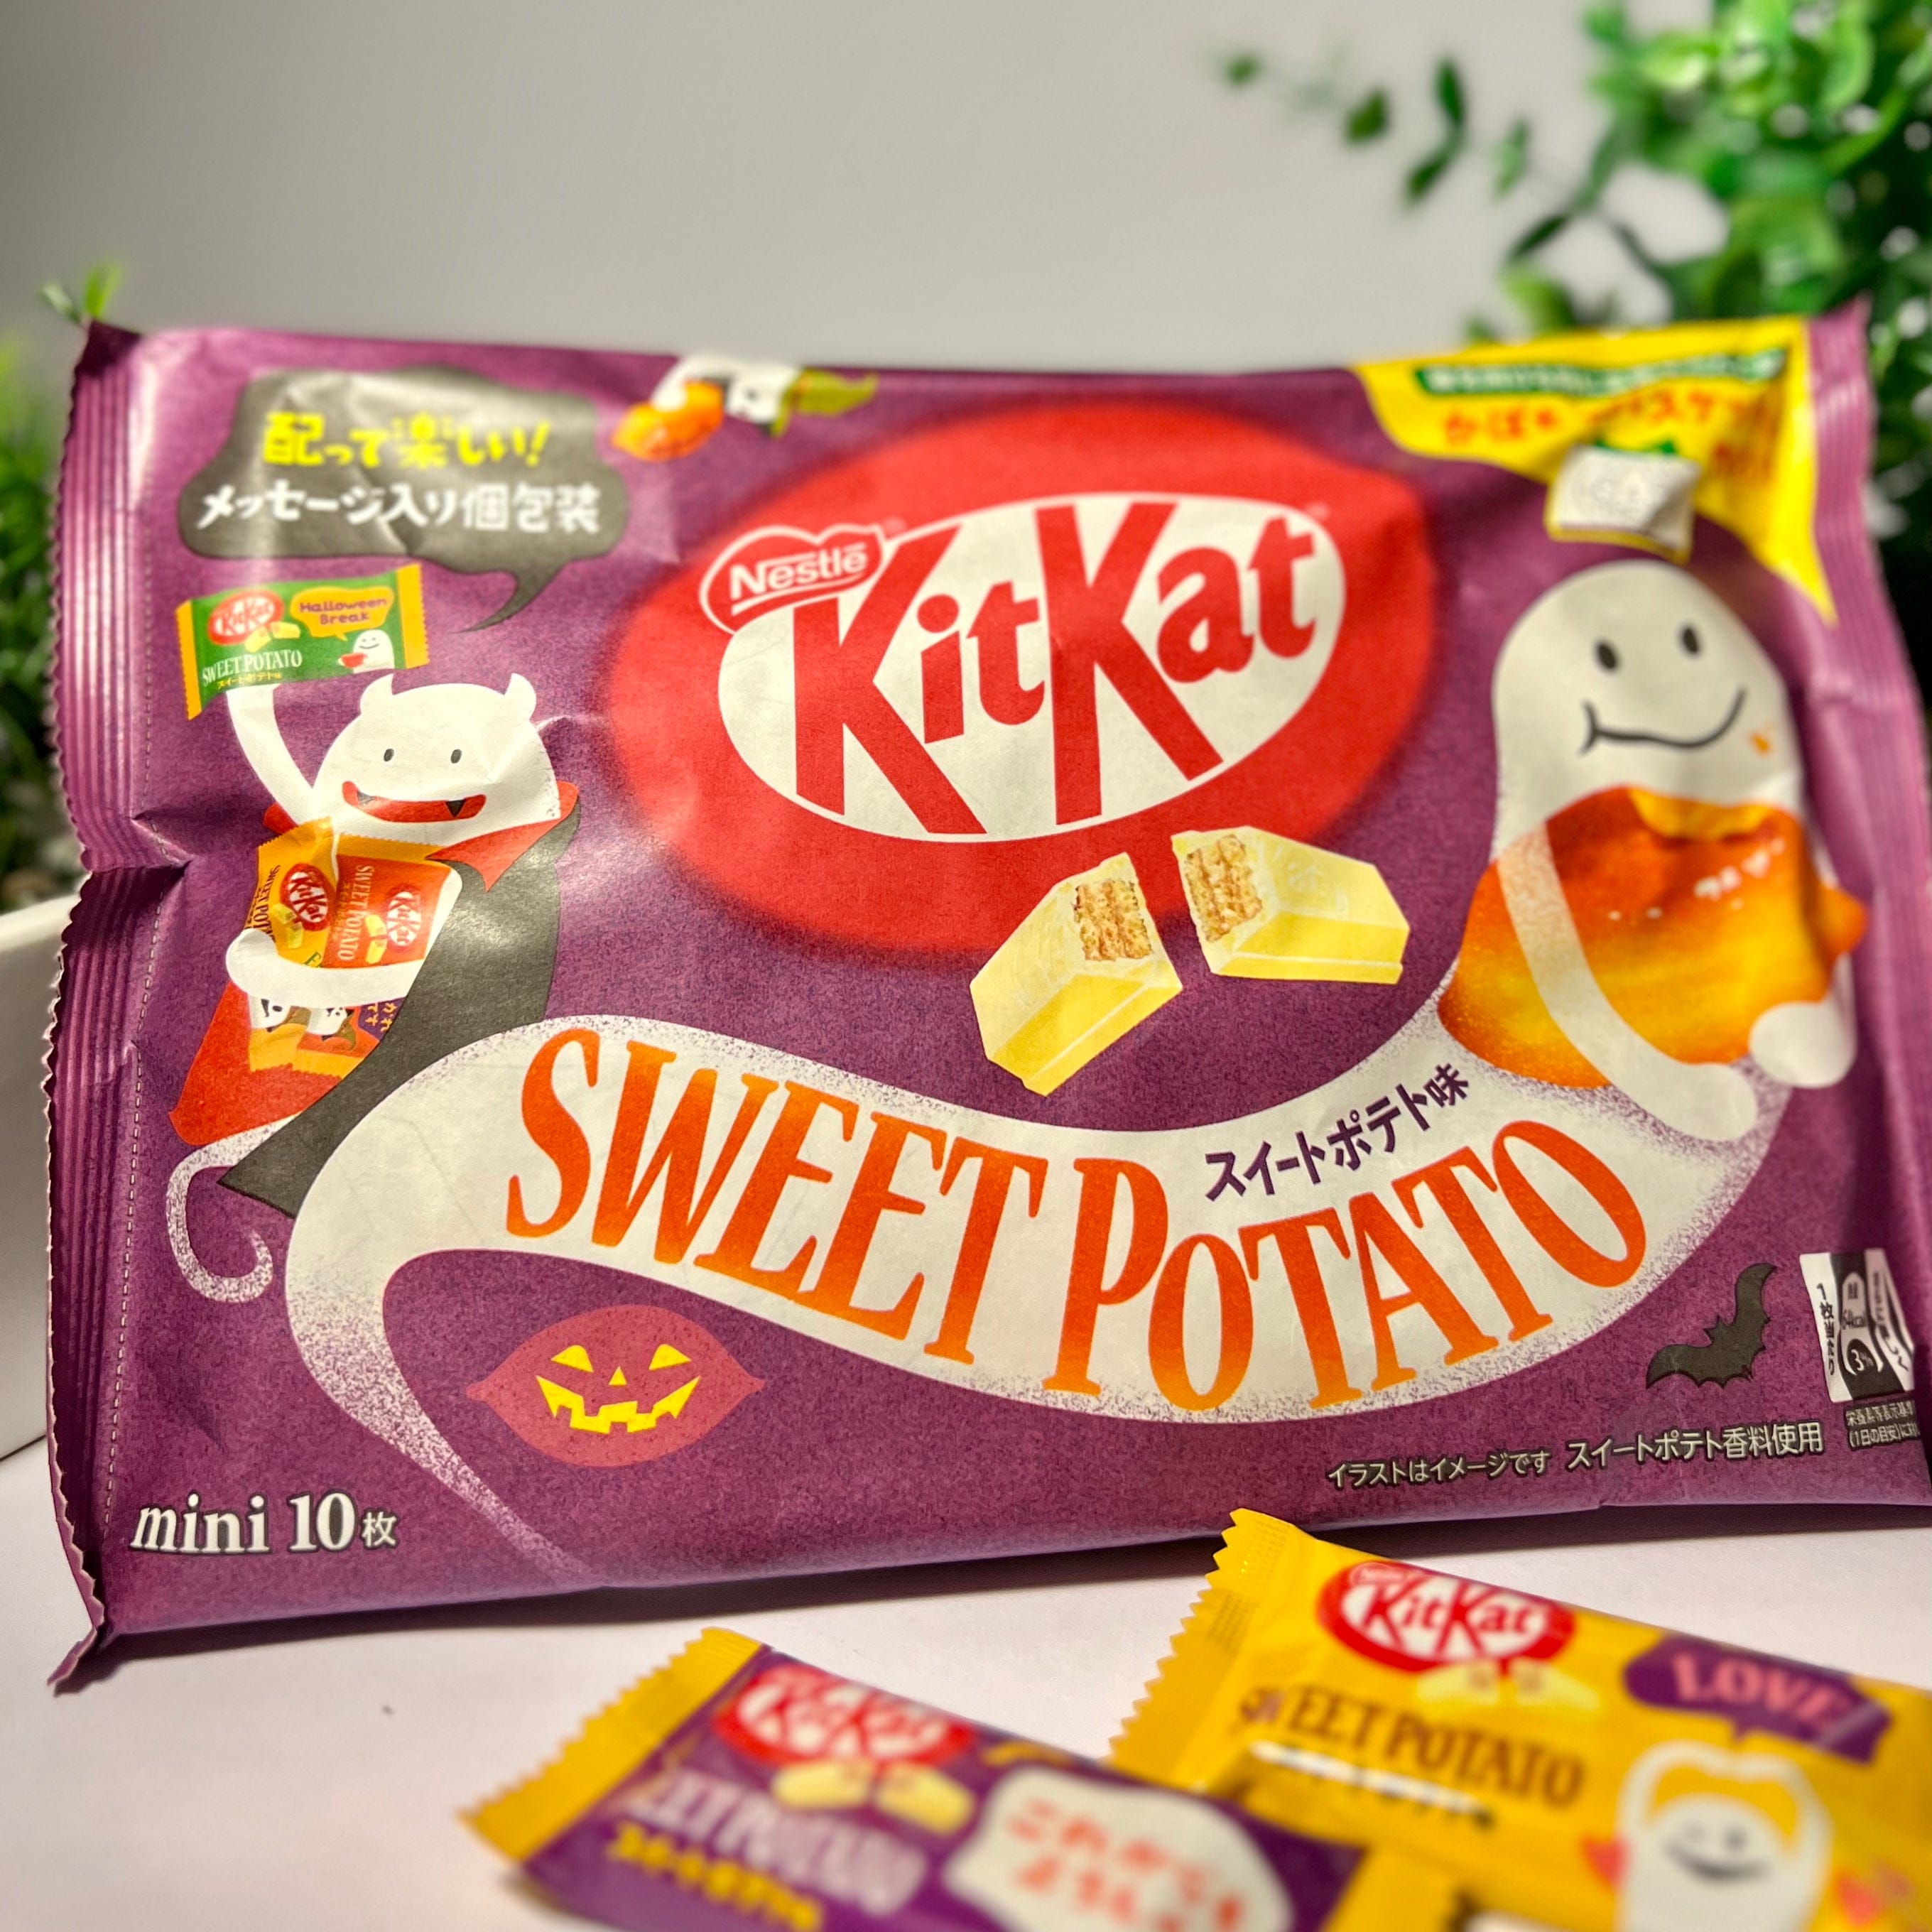 Japanese kitkat nestles kit kats chocolates new sweet potato 27P